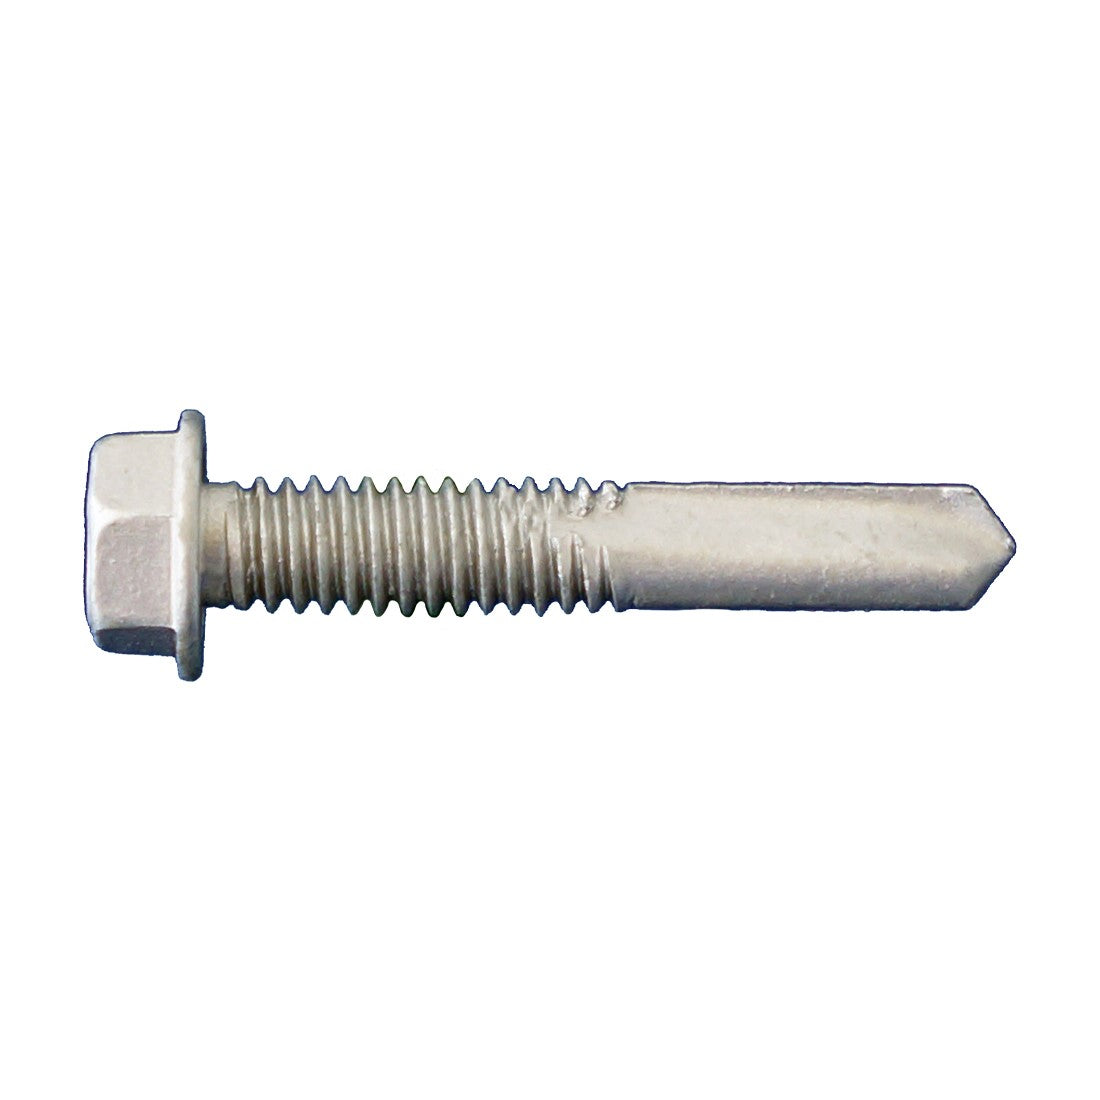 14 inch20 x 5 inch SelfDrilling Metal Screw w#5 Point Hex Head DaggerGuard Coating Pkg 250